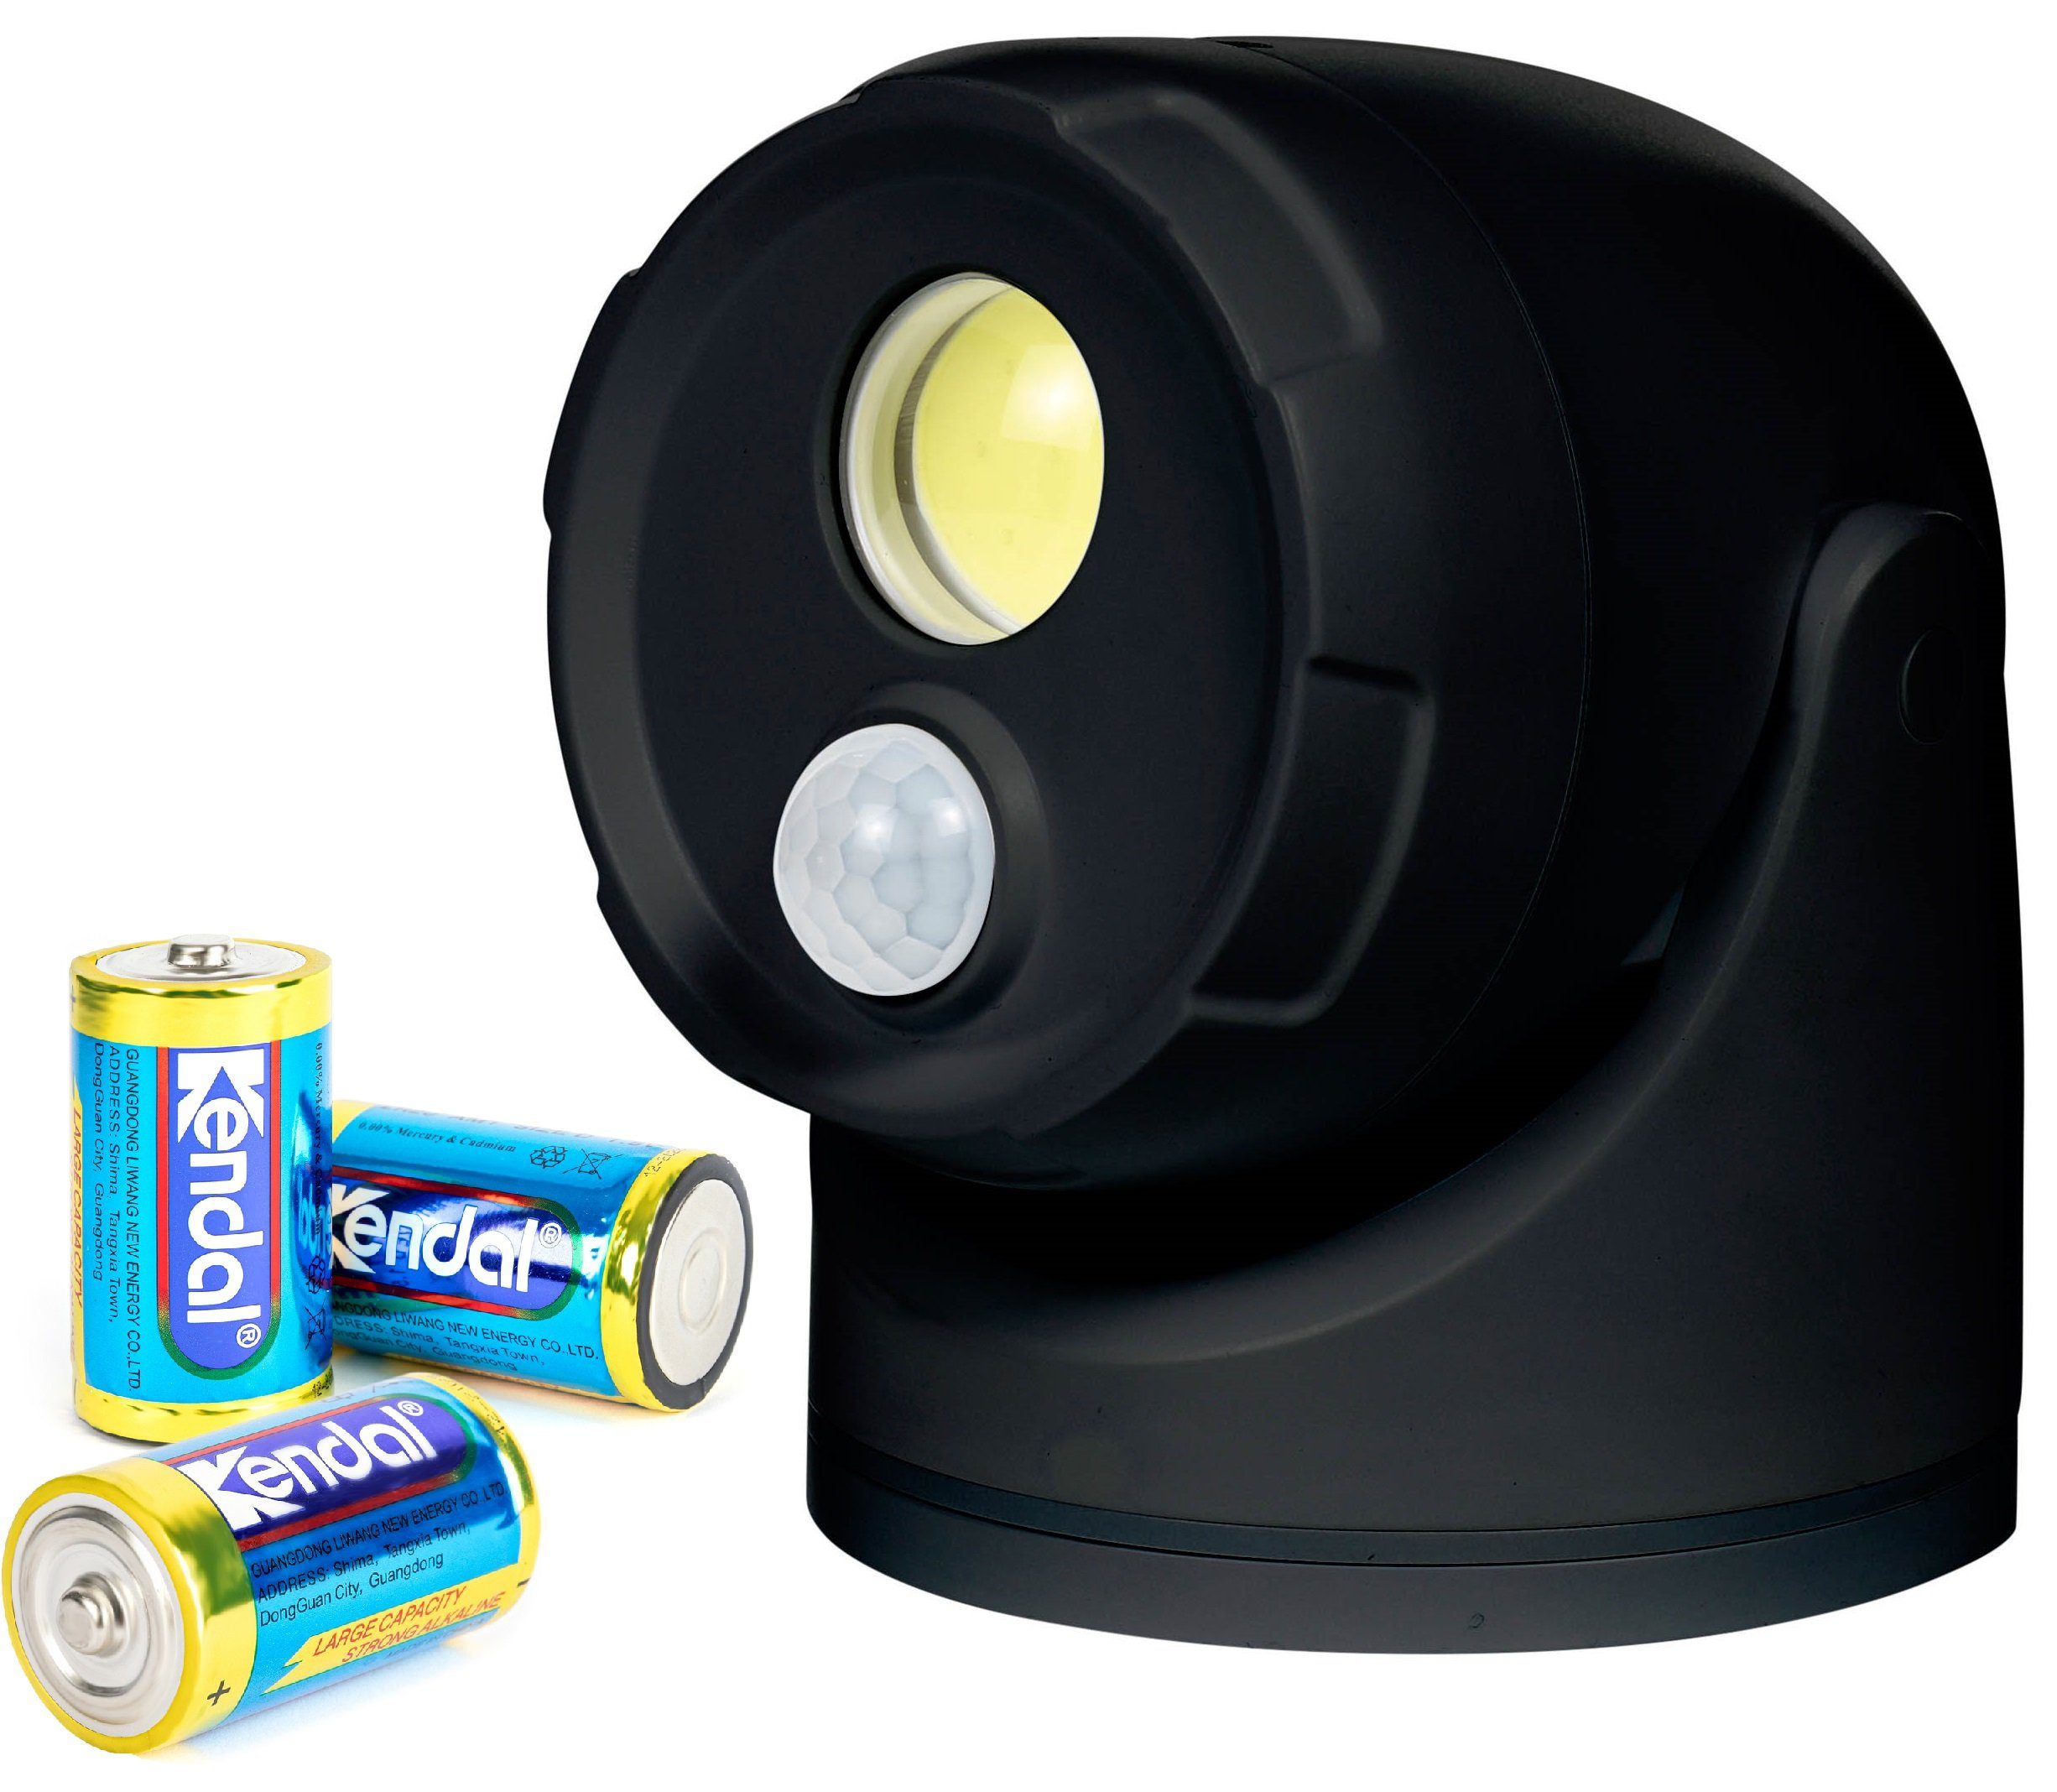 Northpoint Wandstrahler LED Batterie Spot Strahler Flutlicht Bewegungsmelder inkl. D-Batterien Schwarz mit Batterie